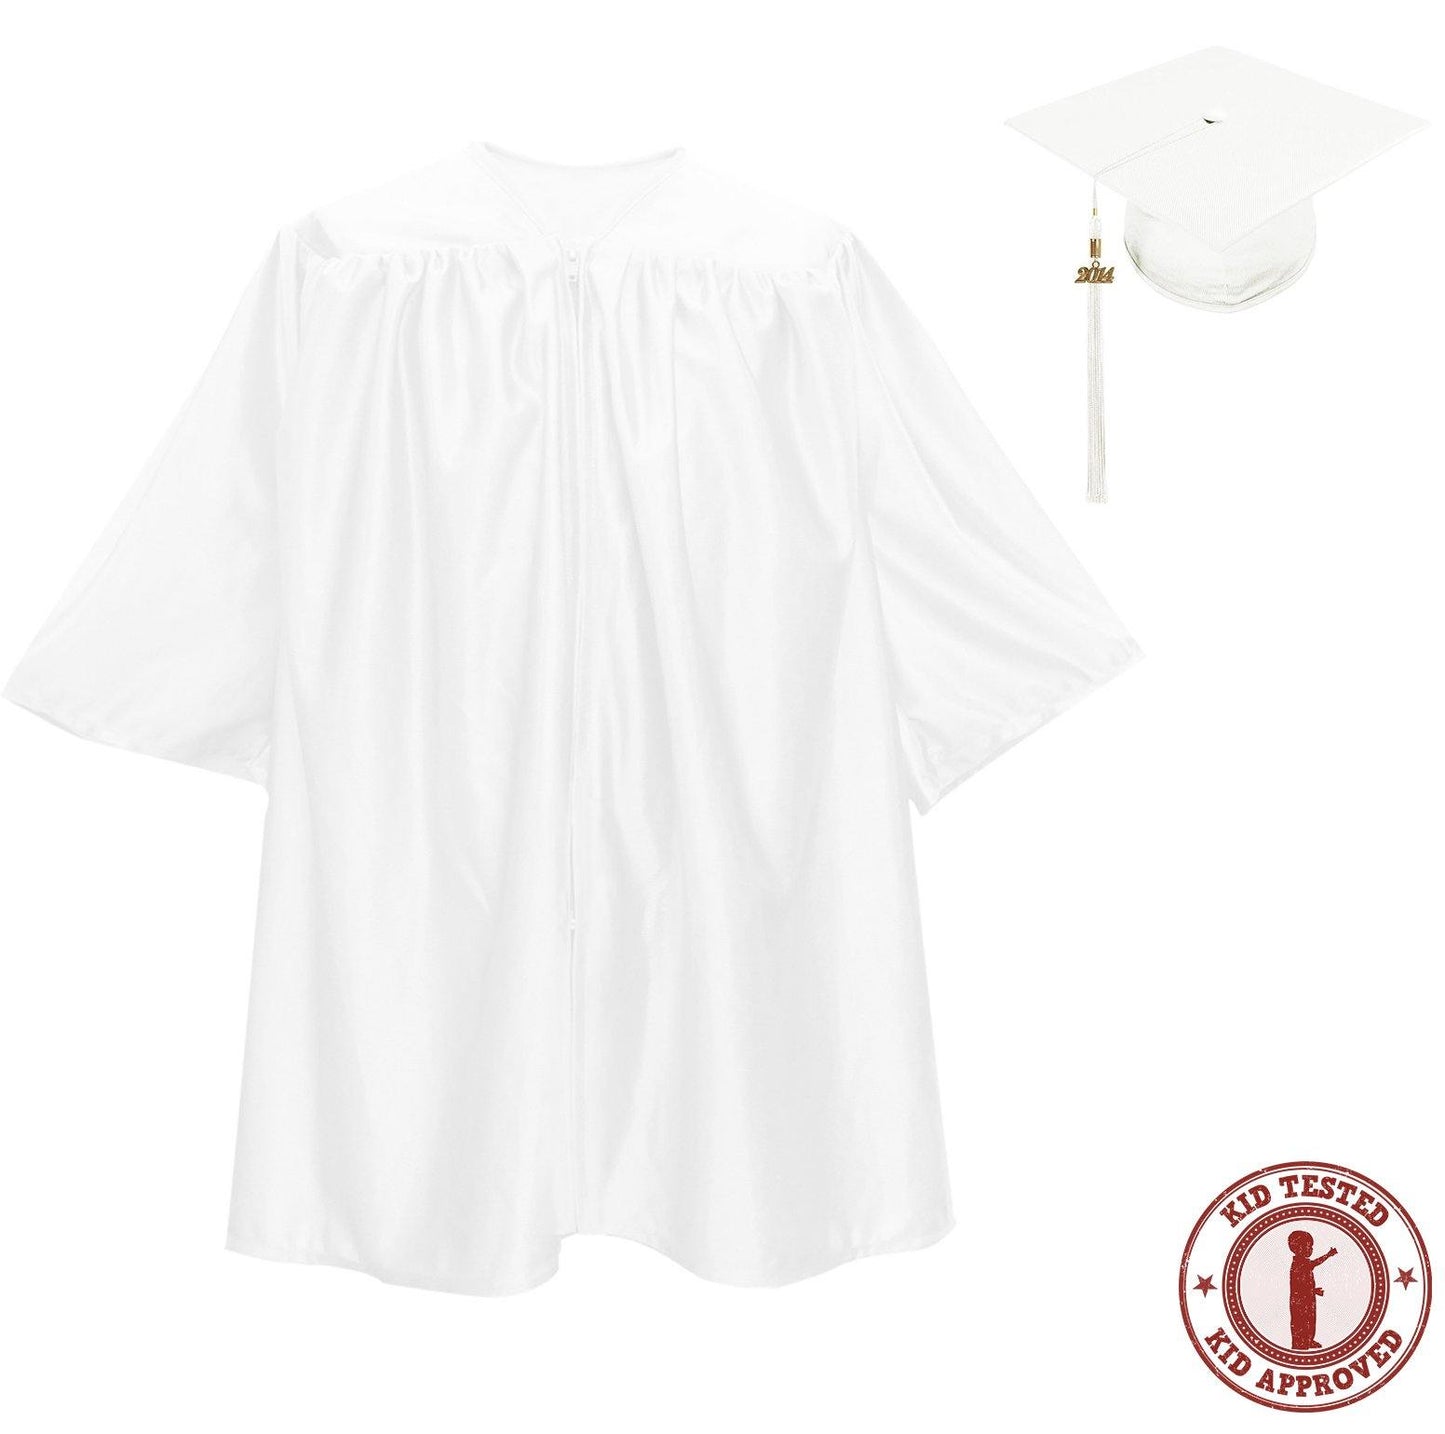 Child White Graduation Cap & Gown - Preschool & Kindergarten - Graduation Attire